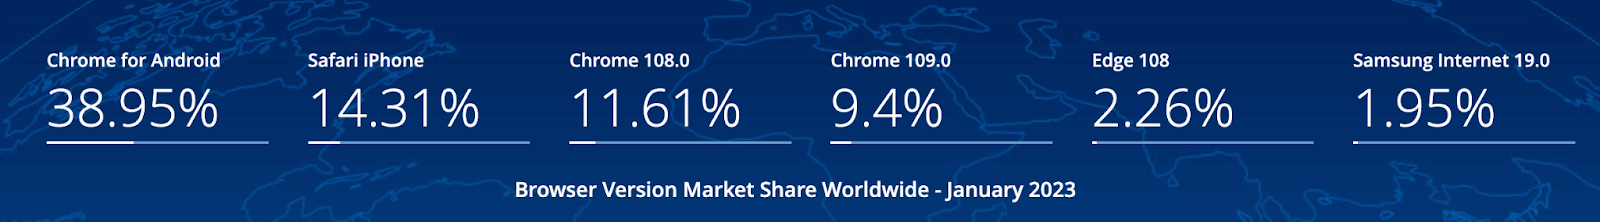 Google Chrome usage